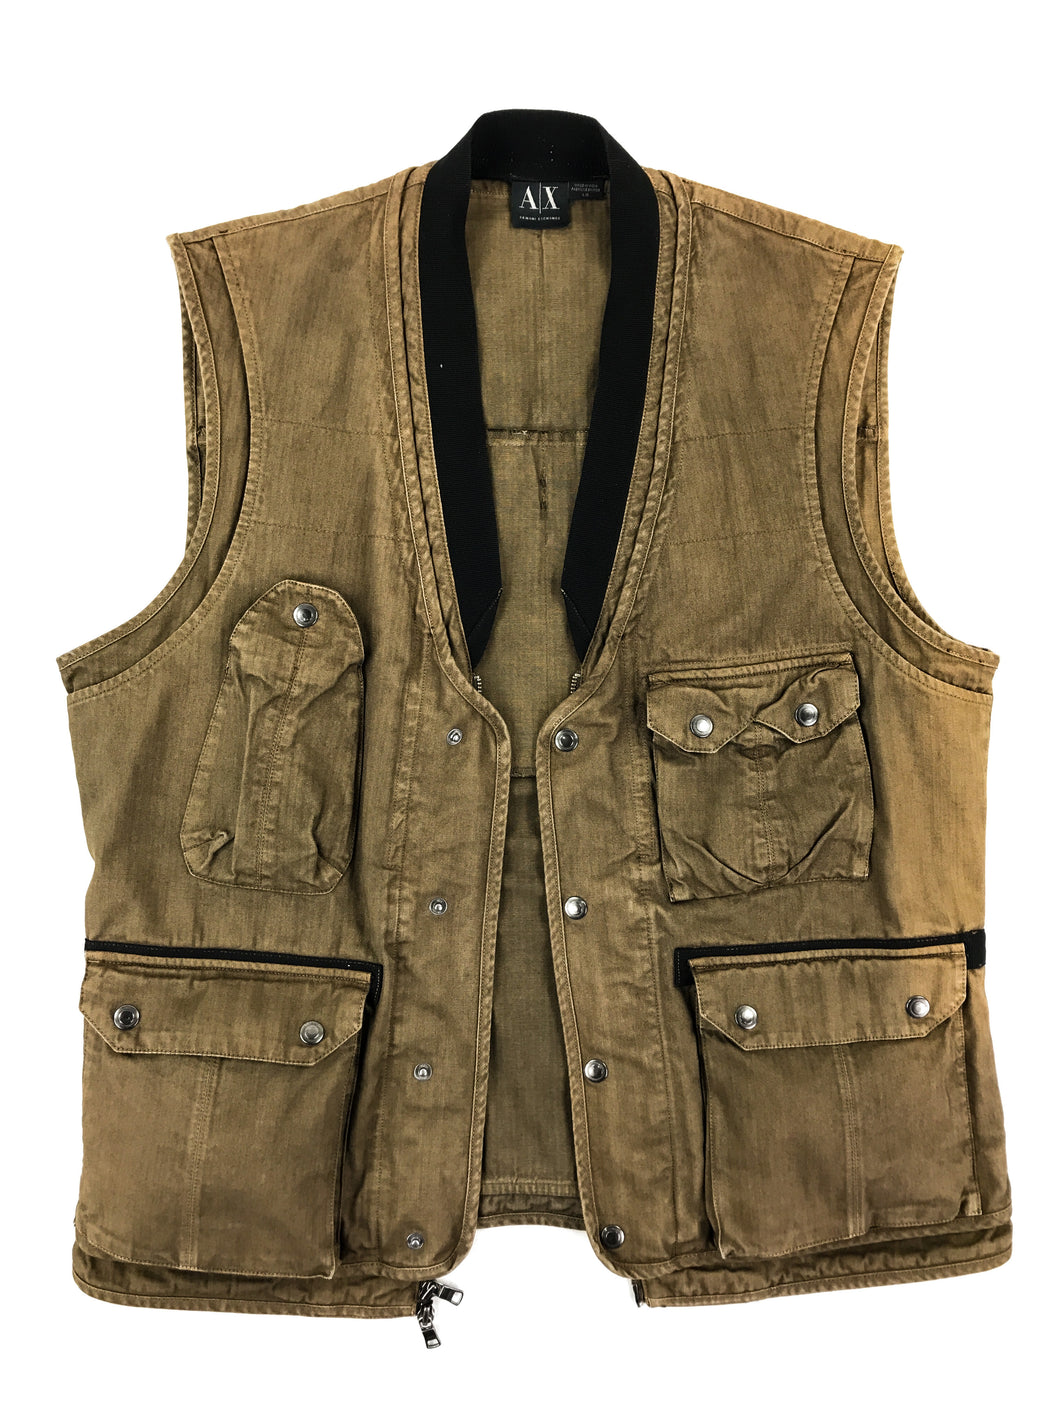 ARMANI EXCHANGE Multi-pocket Tactical Vest (Early 90’s)(L)